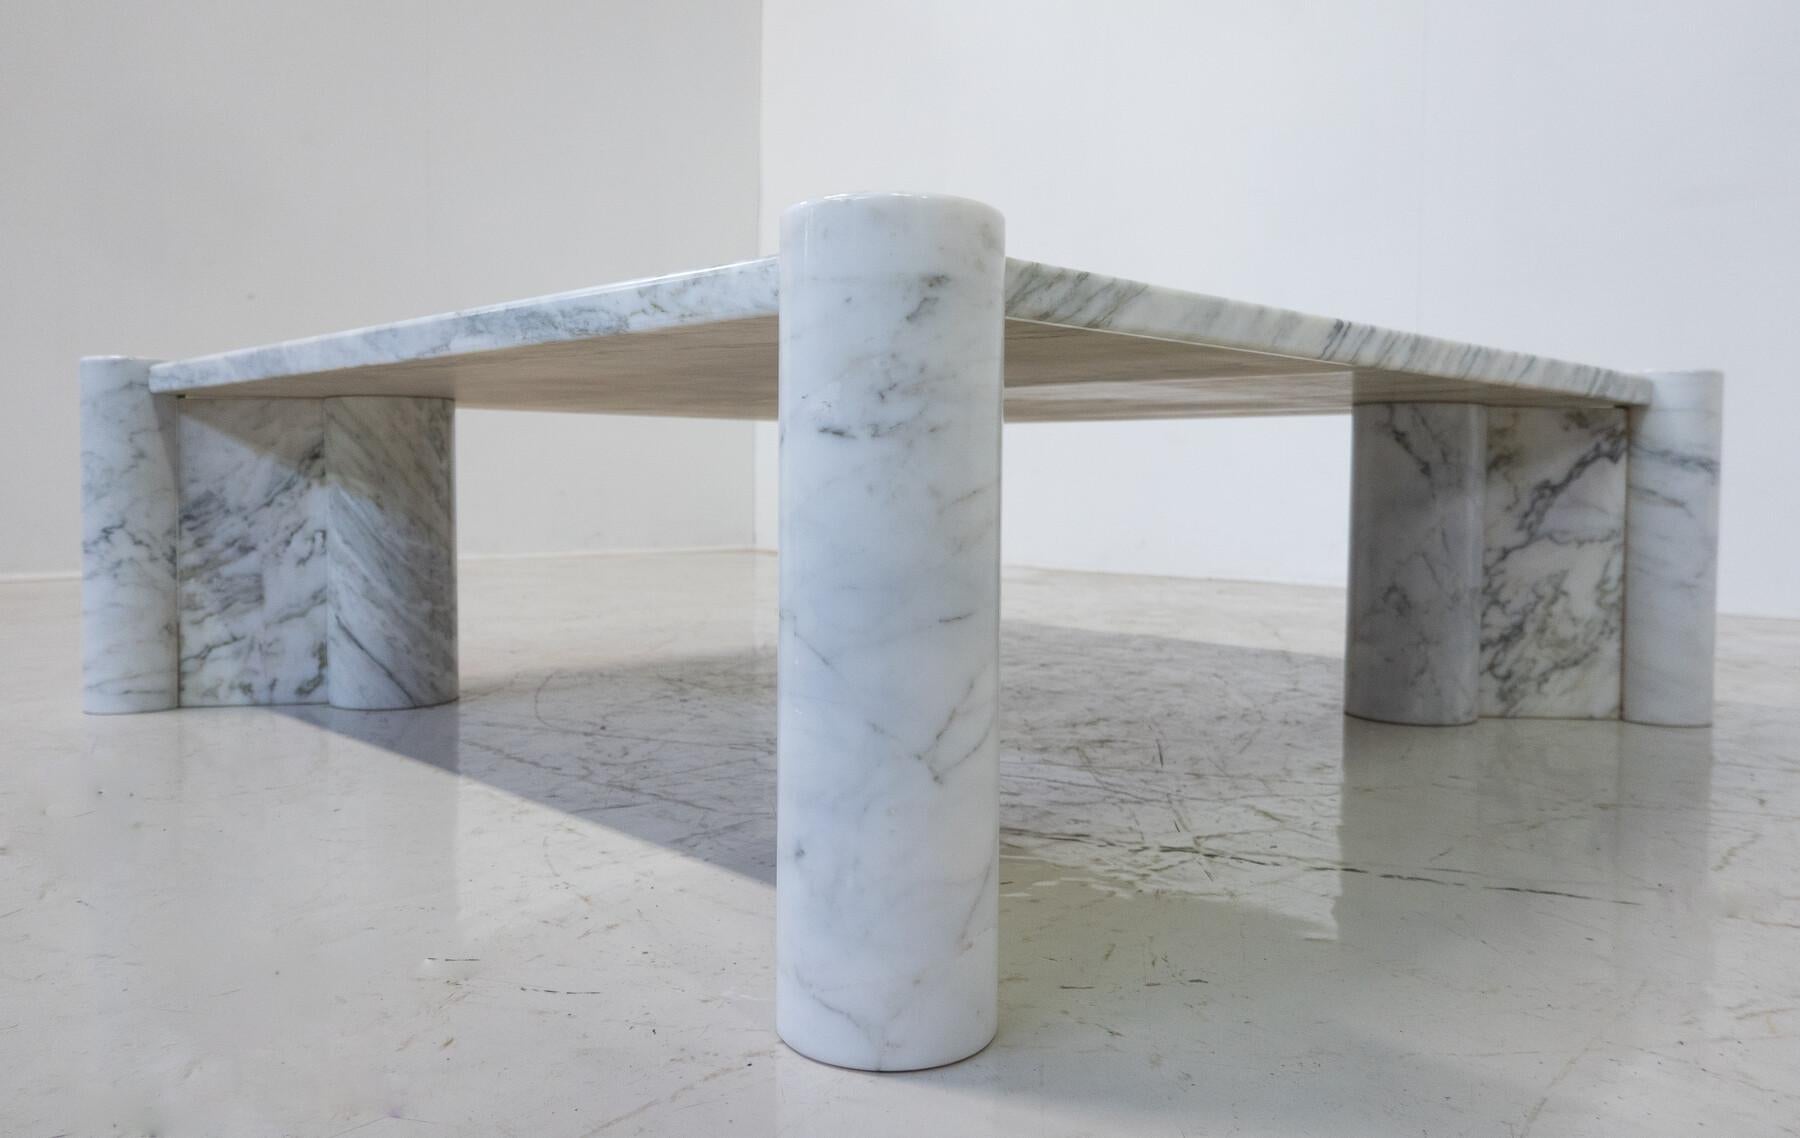 White Carrara Marble Jumbo Coffee Table by Gae Aulenti for Knoll Inc, 1960s 3